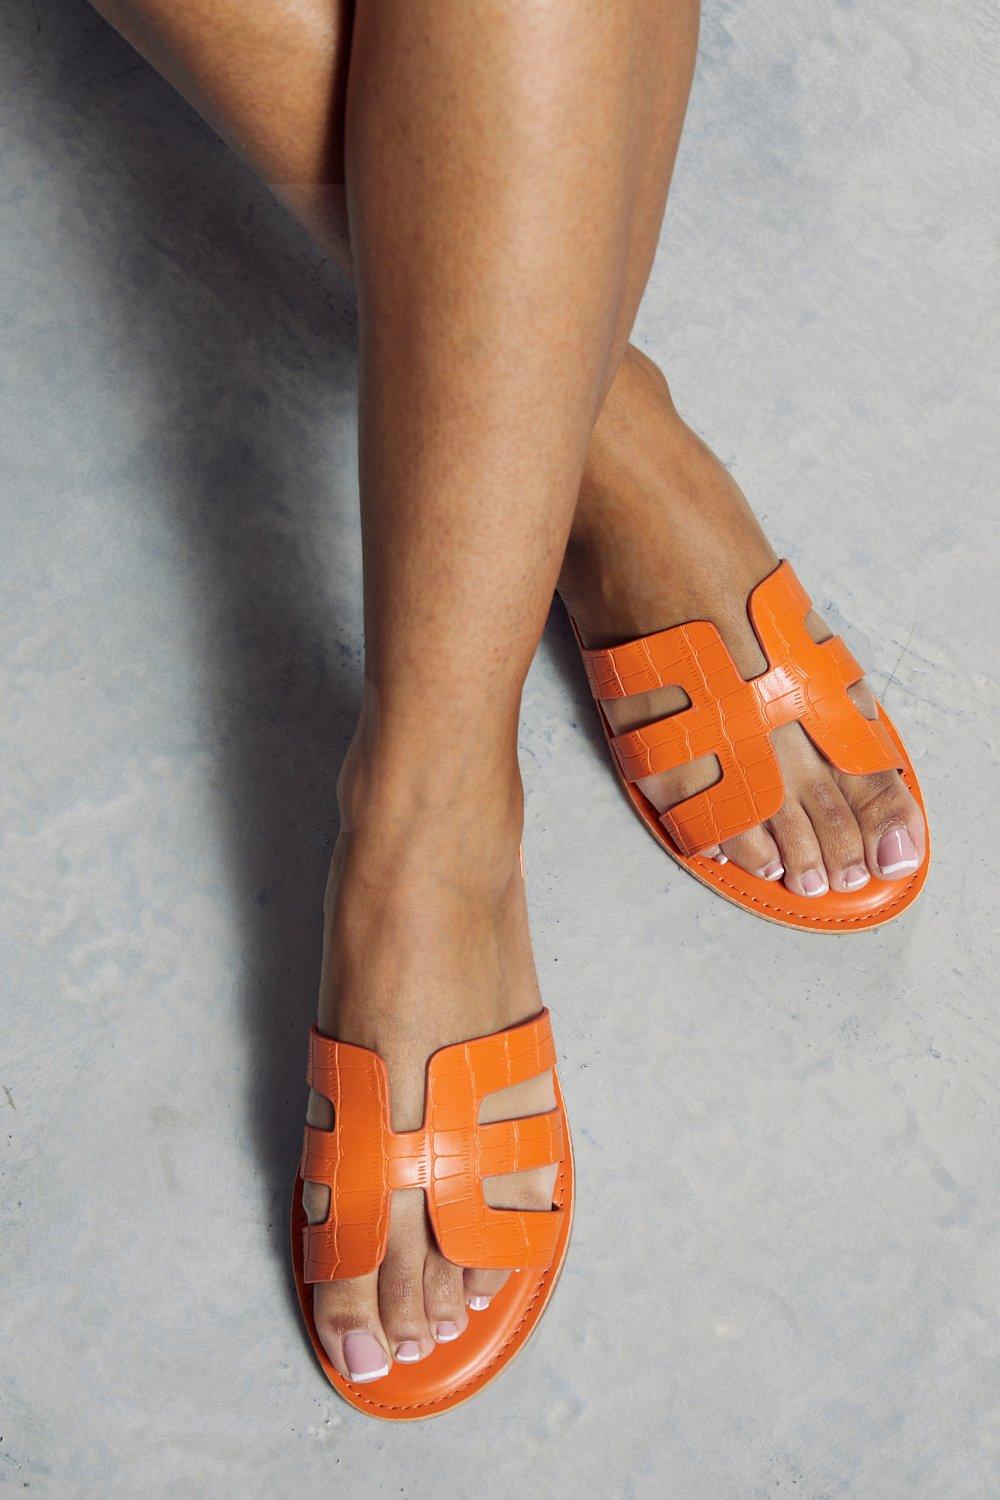 womens croc leather look cut out sandals - orange - 6, orange